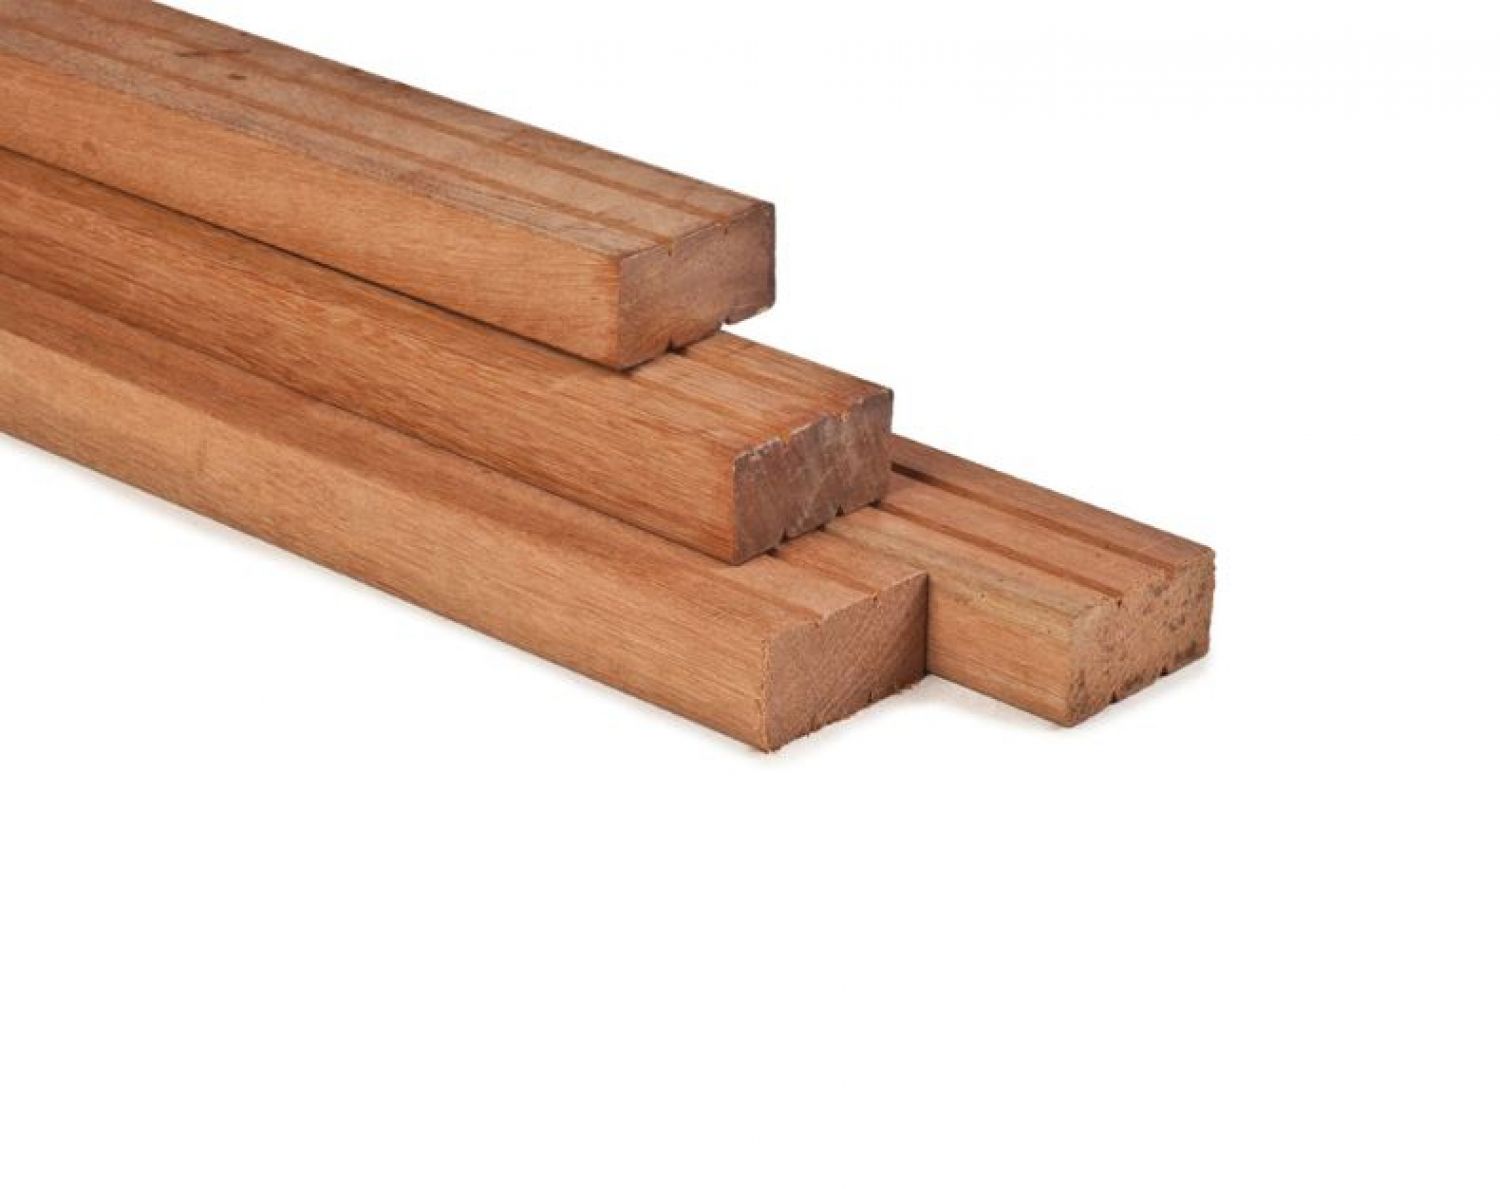 Hardhout geschaafd timmerhout 4,4x8,8x430 cm